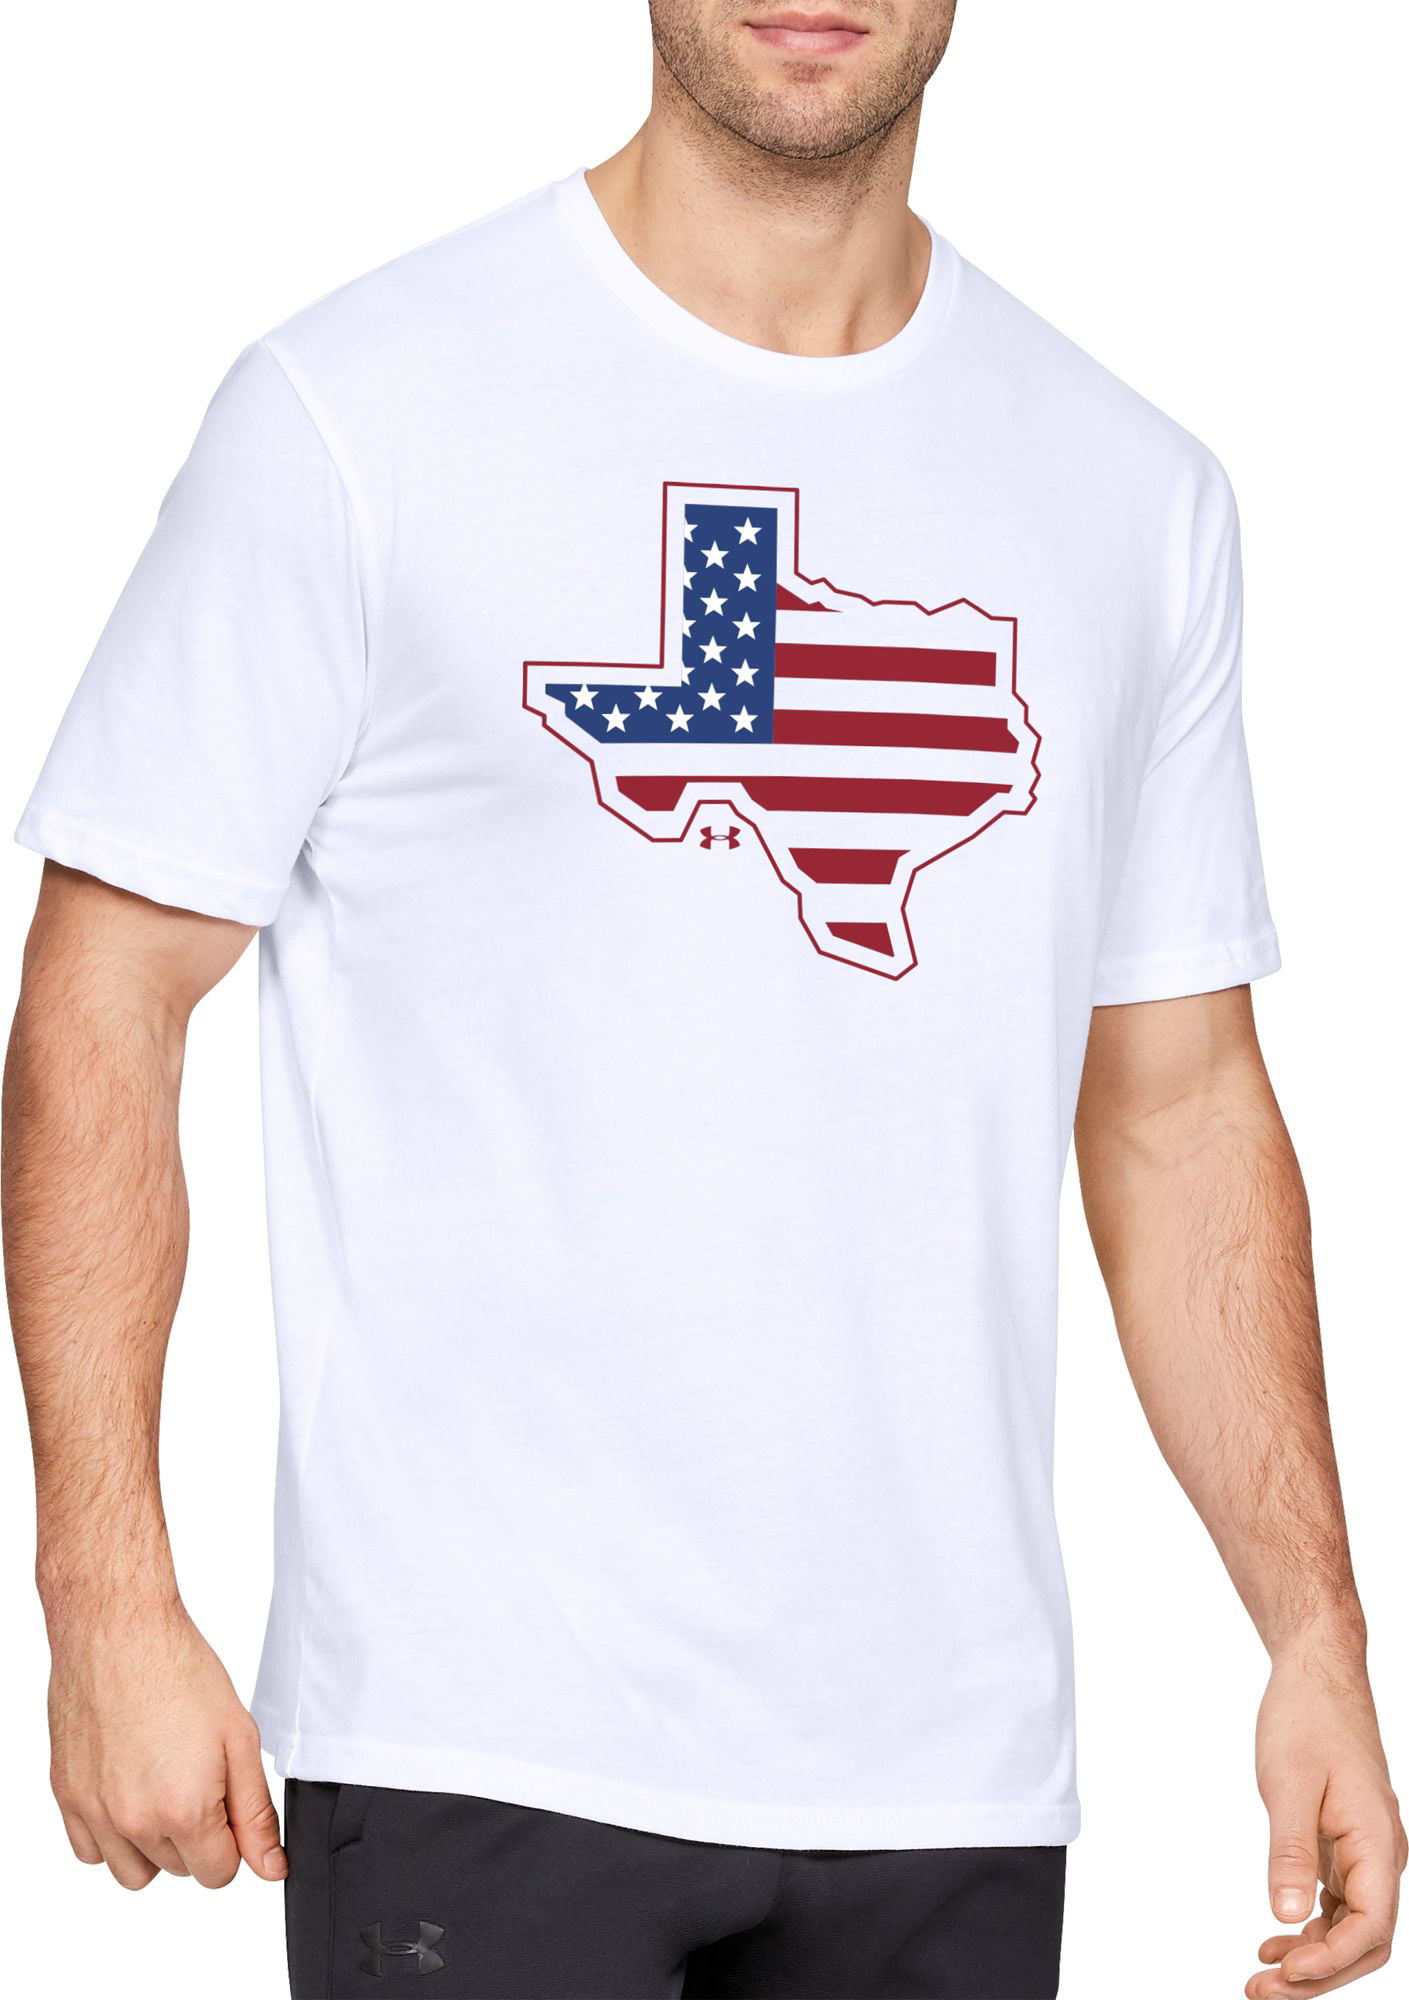 Under Armour - Under Armour Men's Texas USA State T-Shirt - Walmart.com ...